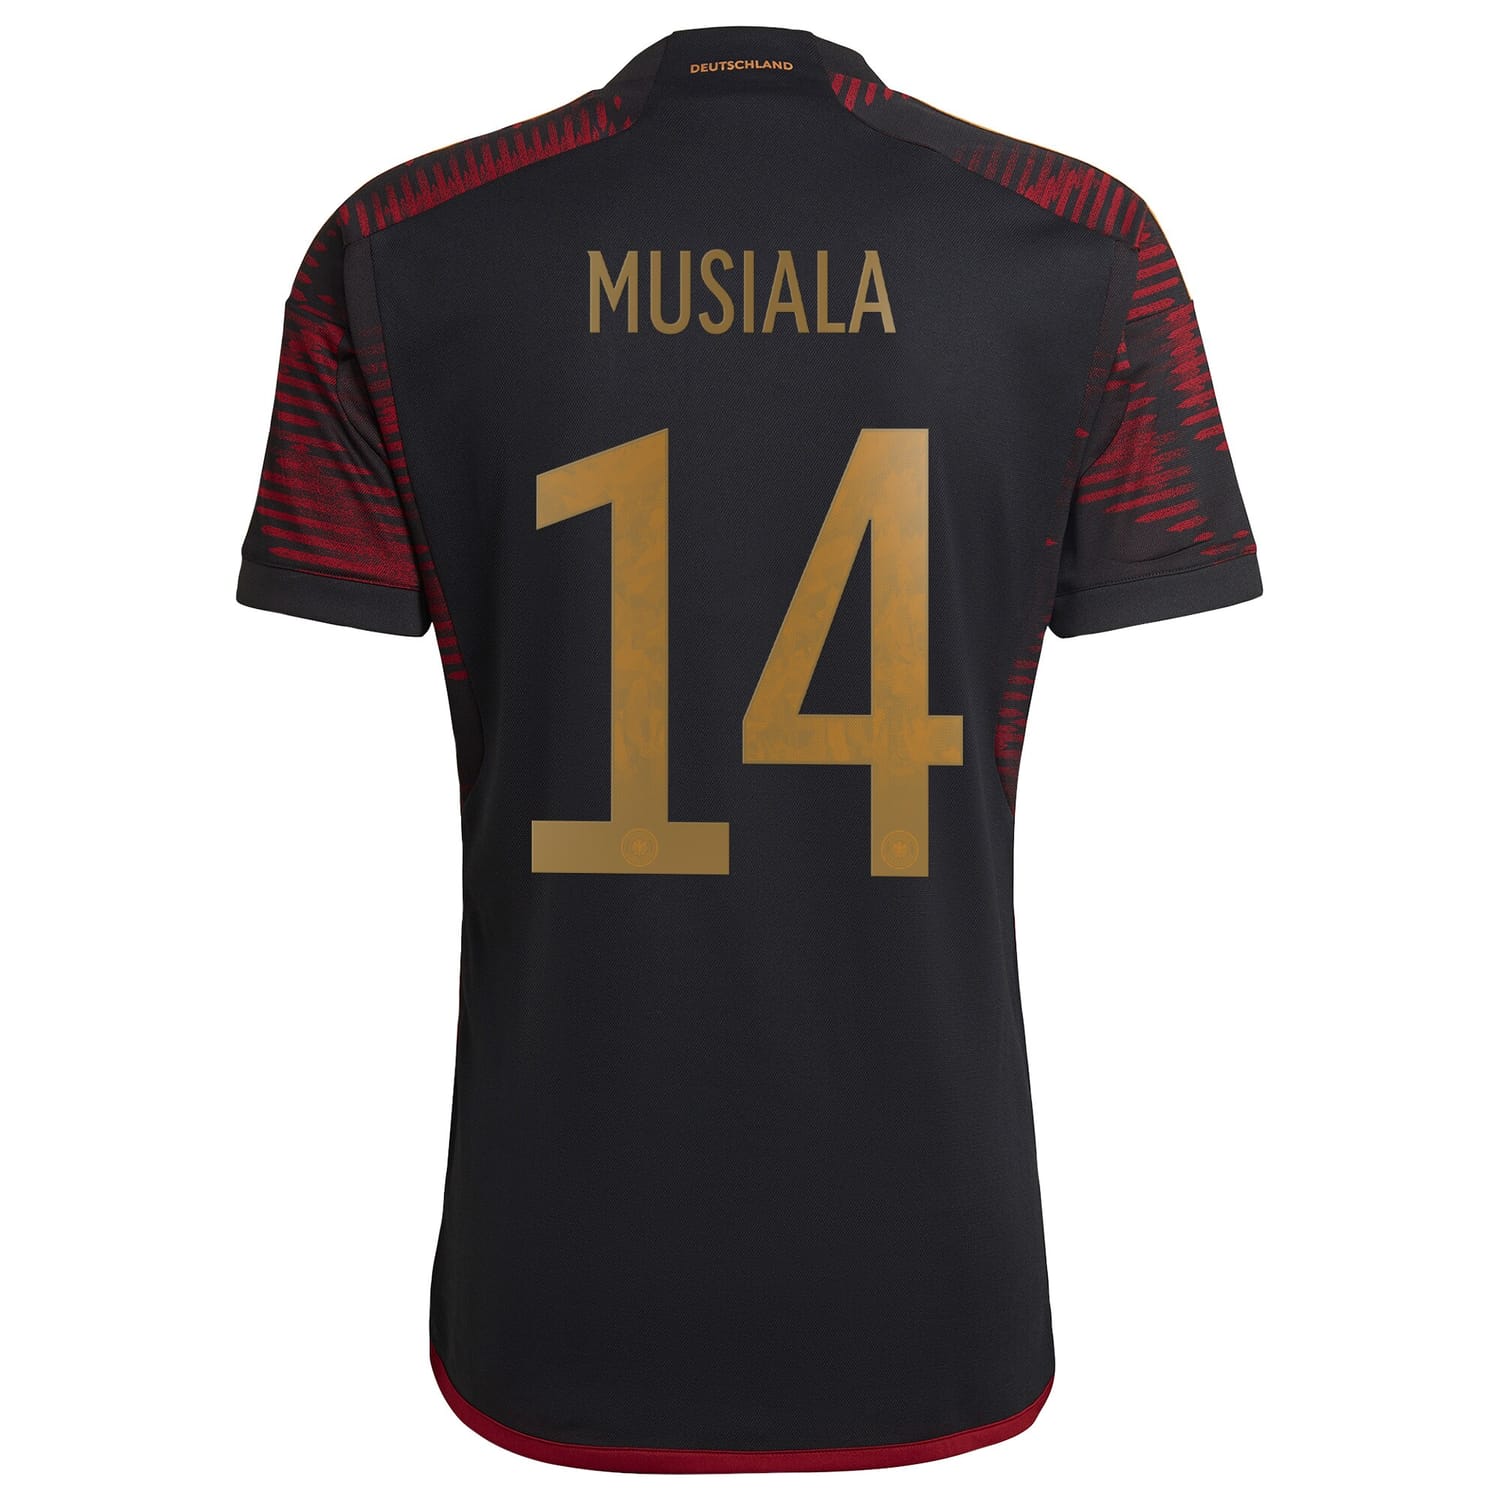 Germany National Team Away Jersey Shirt player Jamal Musiala 14 printing for Men